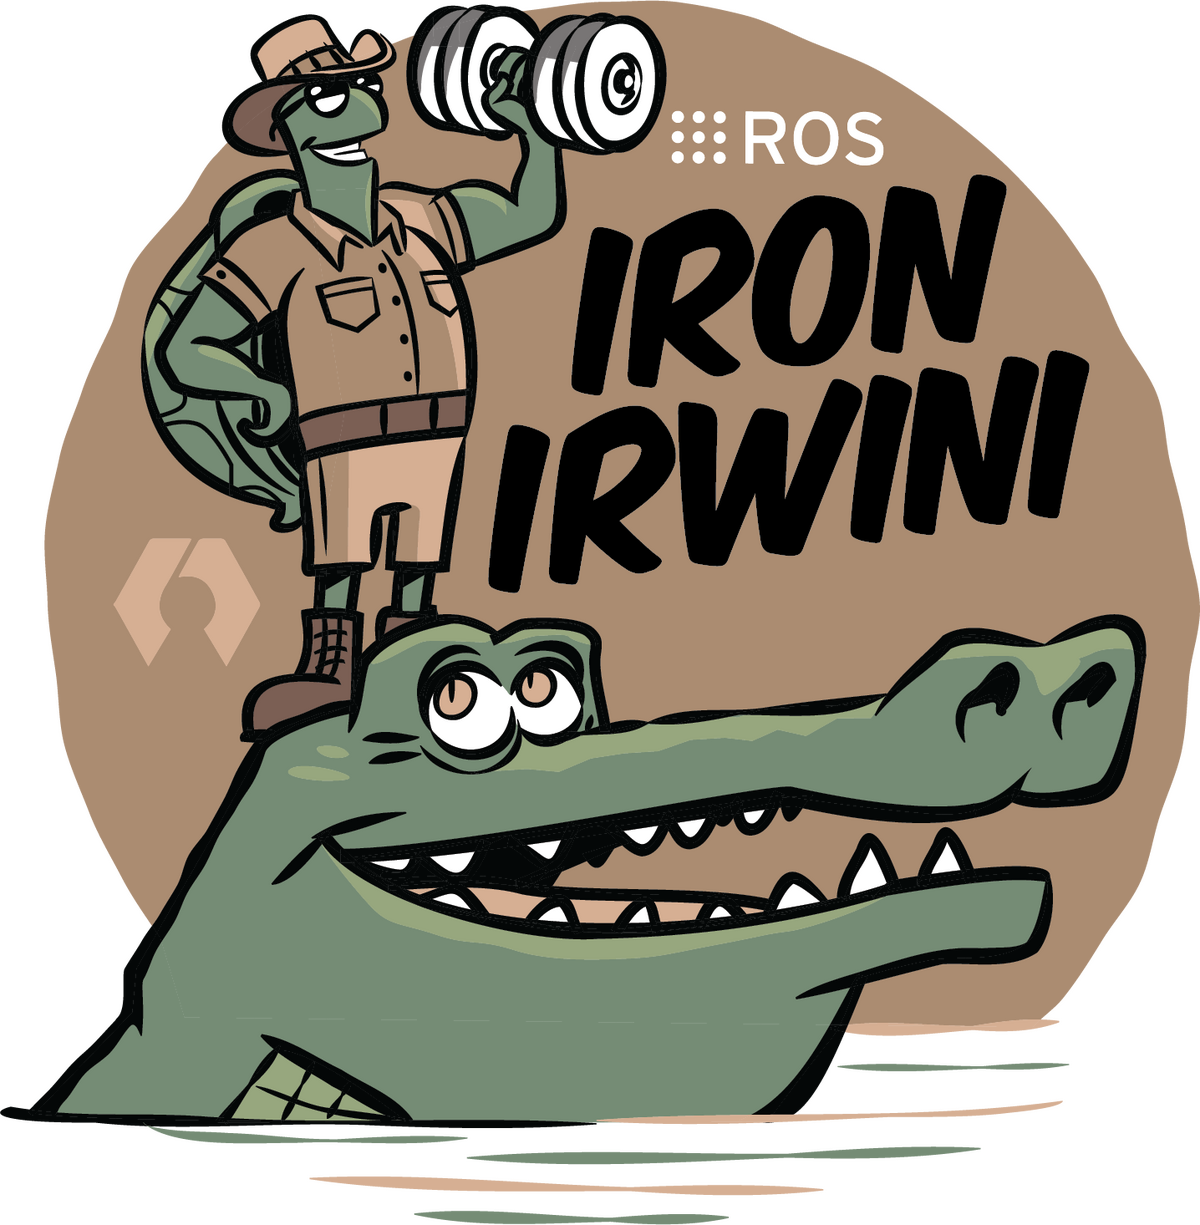 How to Install ROS 2 Iron on Ubuntu Linux